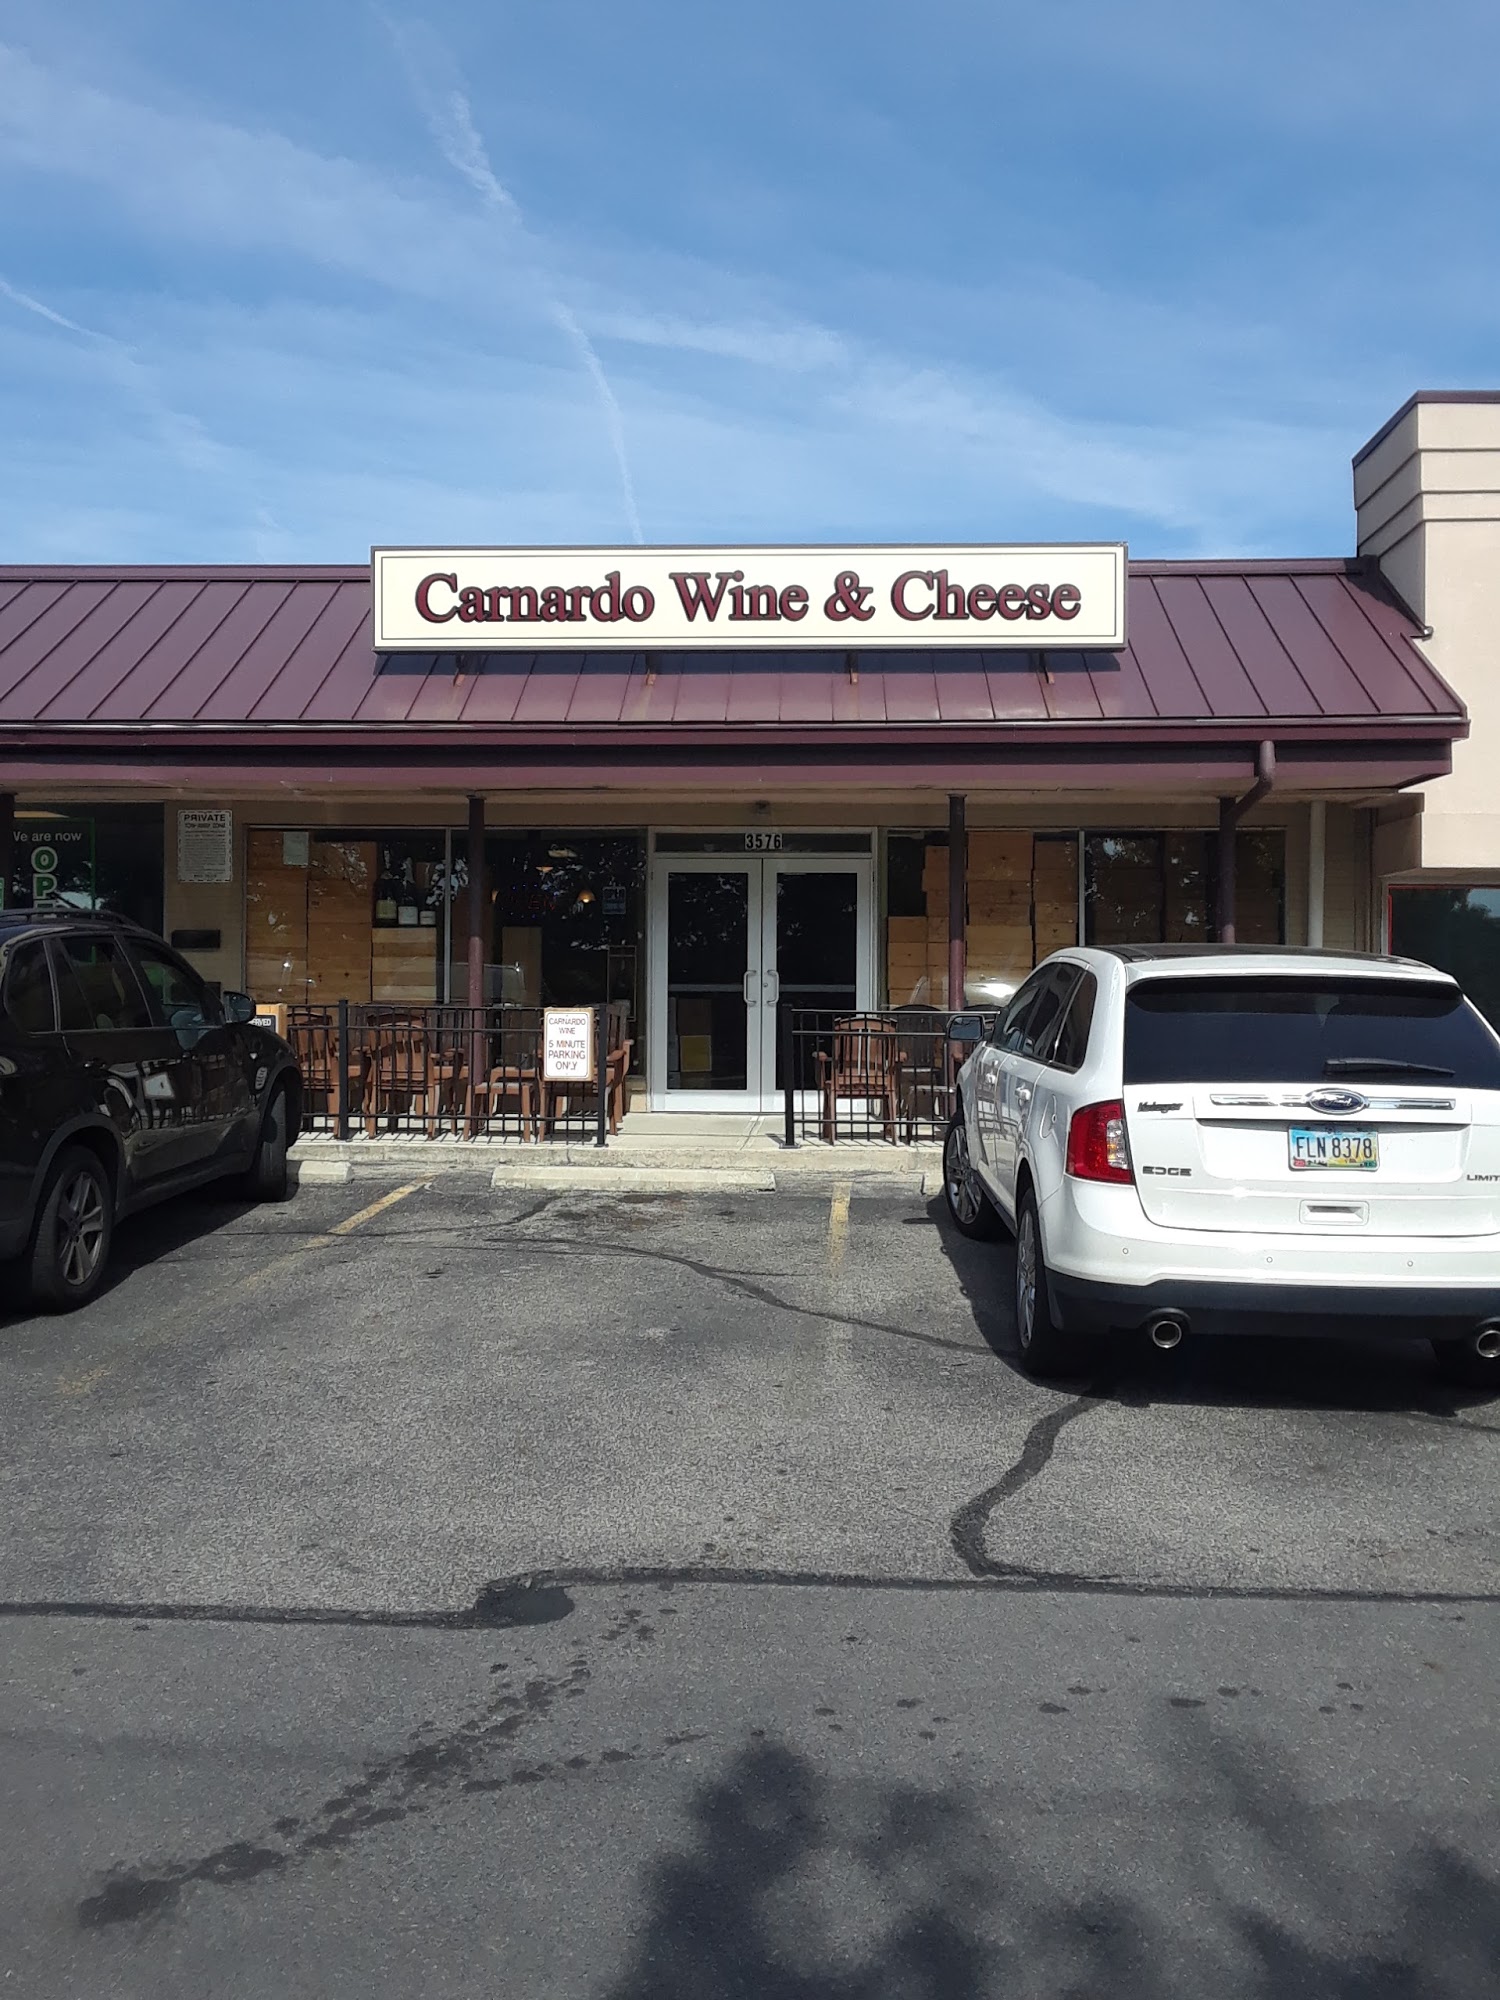 Carnardo Wine & Cheese